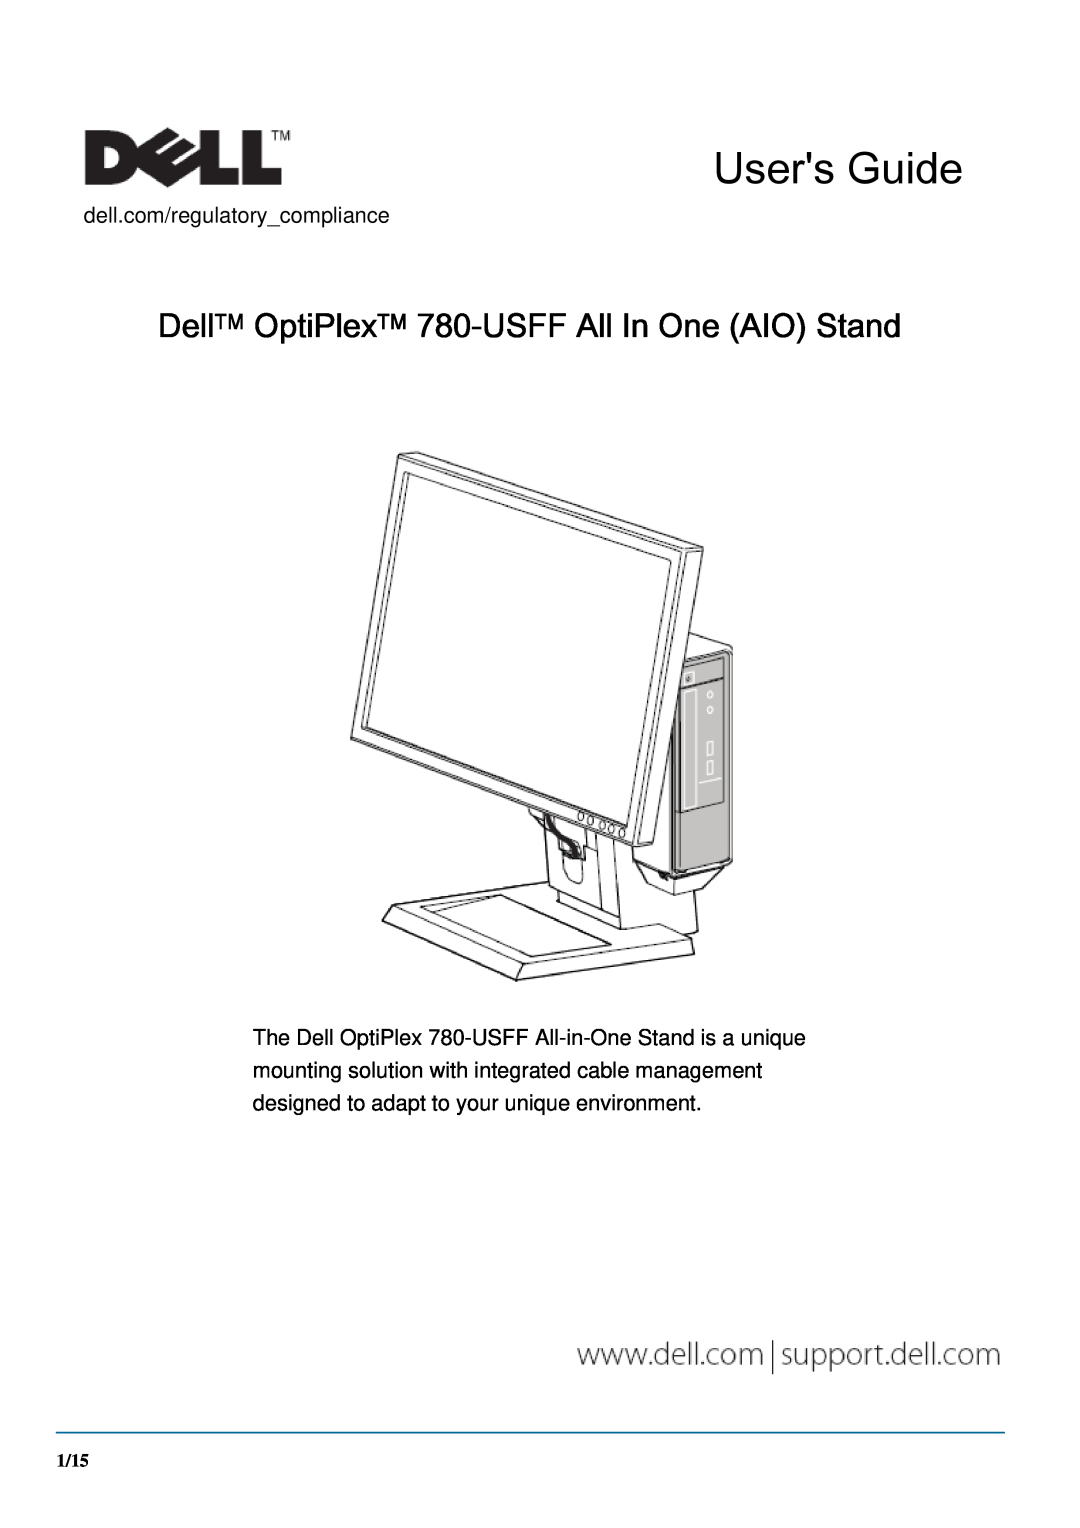 Dell ARAIO, 1909W manual DellTM OptiPlexTM 780-USFF All In One AIO Stand, dell.com/regulatorycompliance, Users Guide, 1/15 